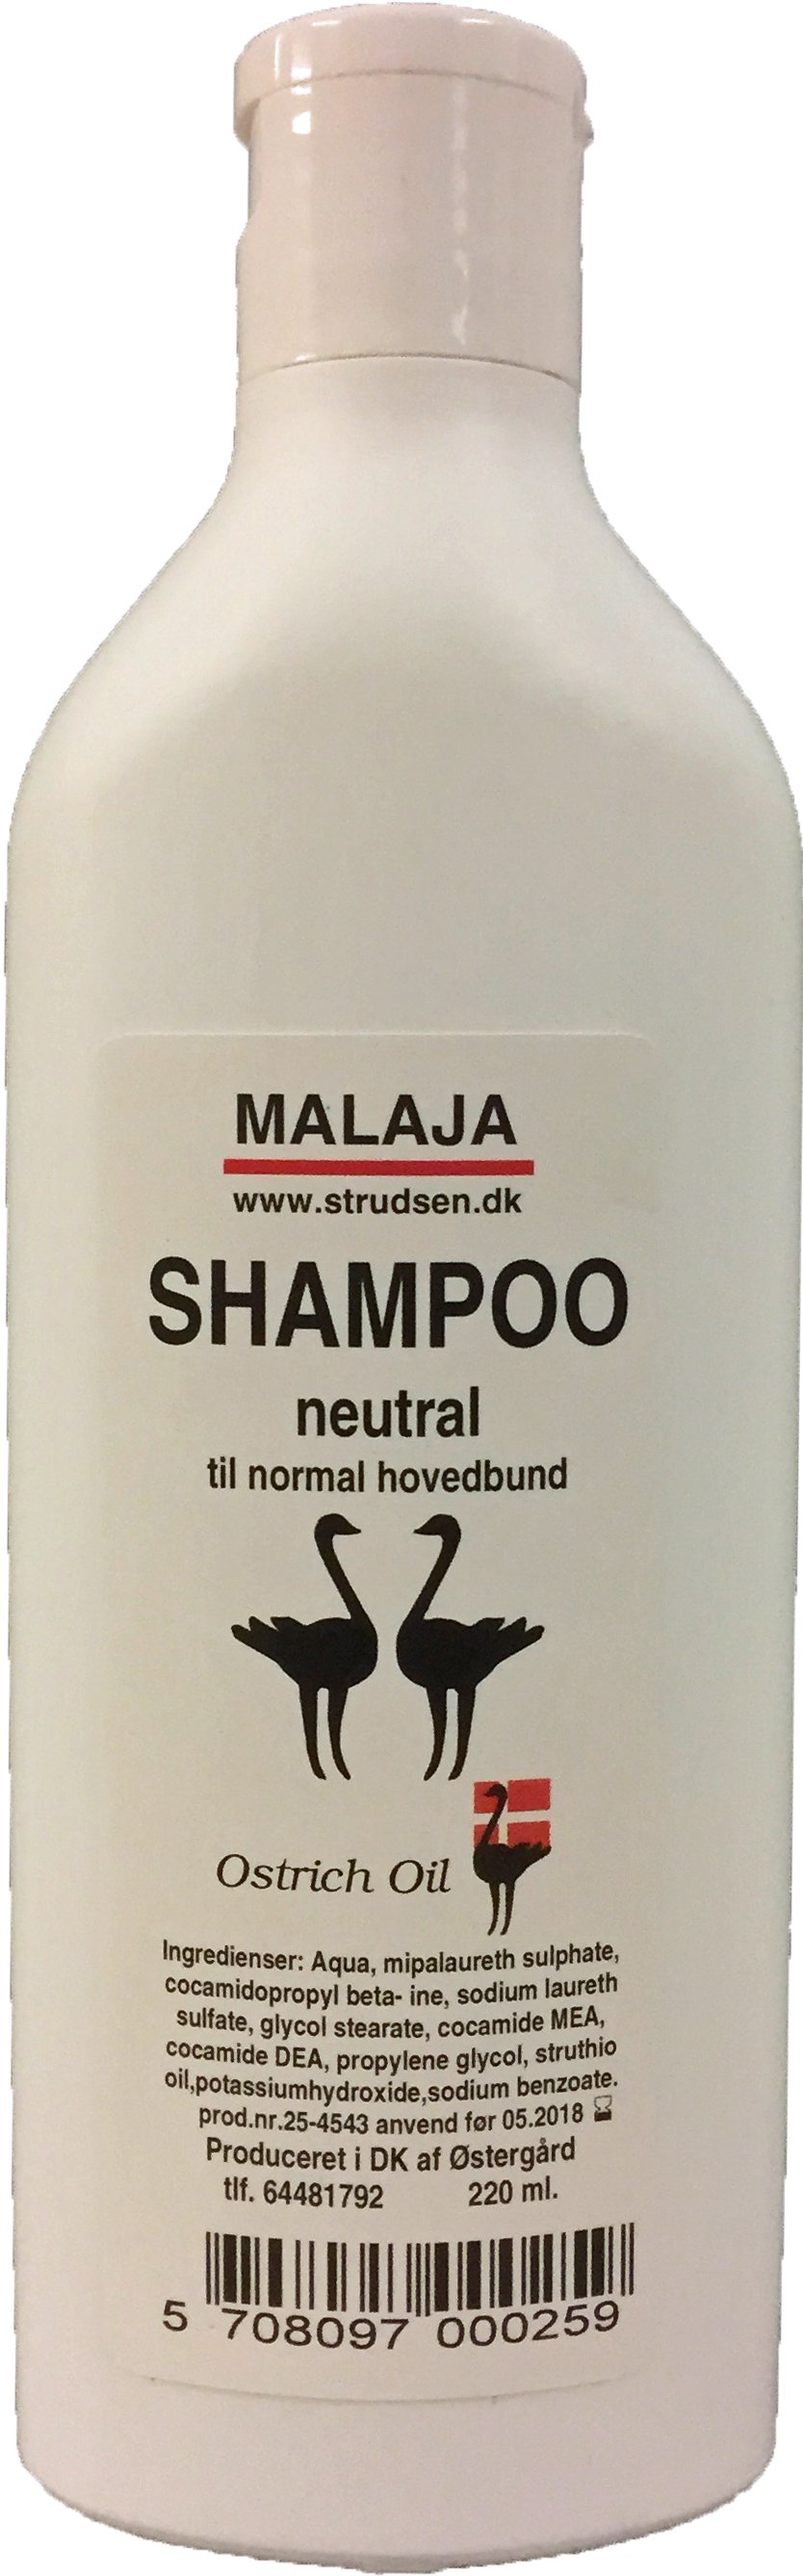 Shampoo normal hovedbund neutral - Shampoo og hårkur - Strudsen.dk